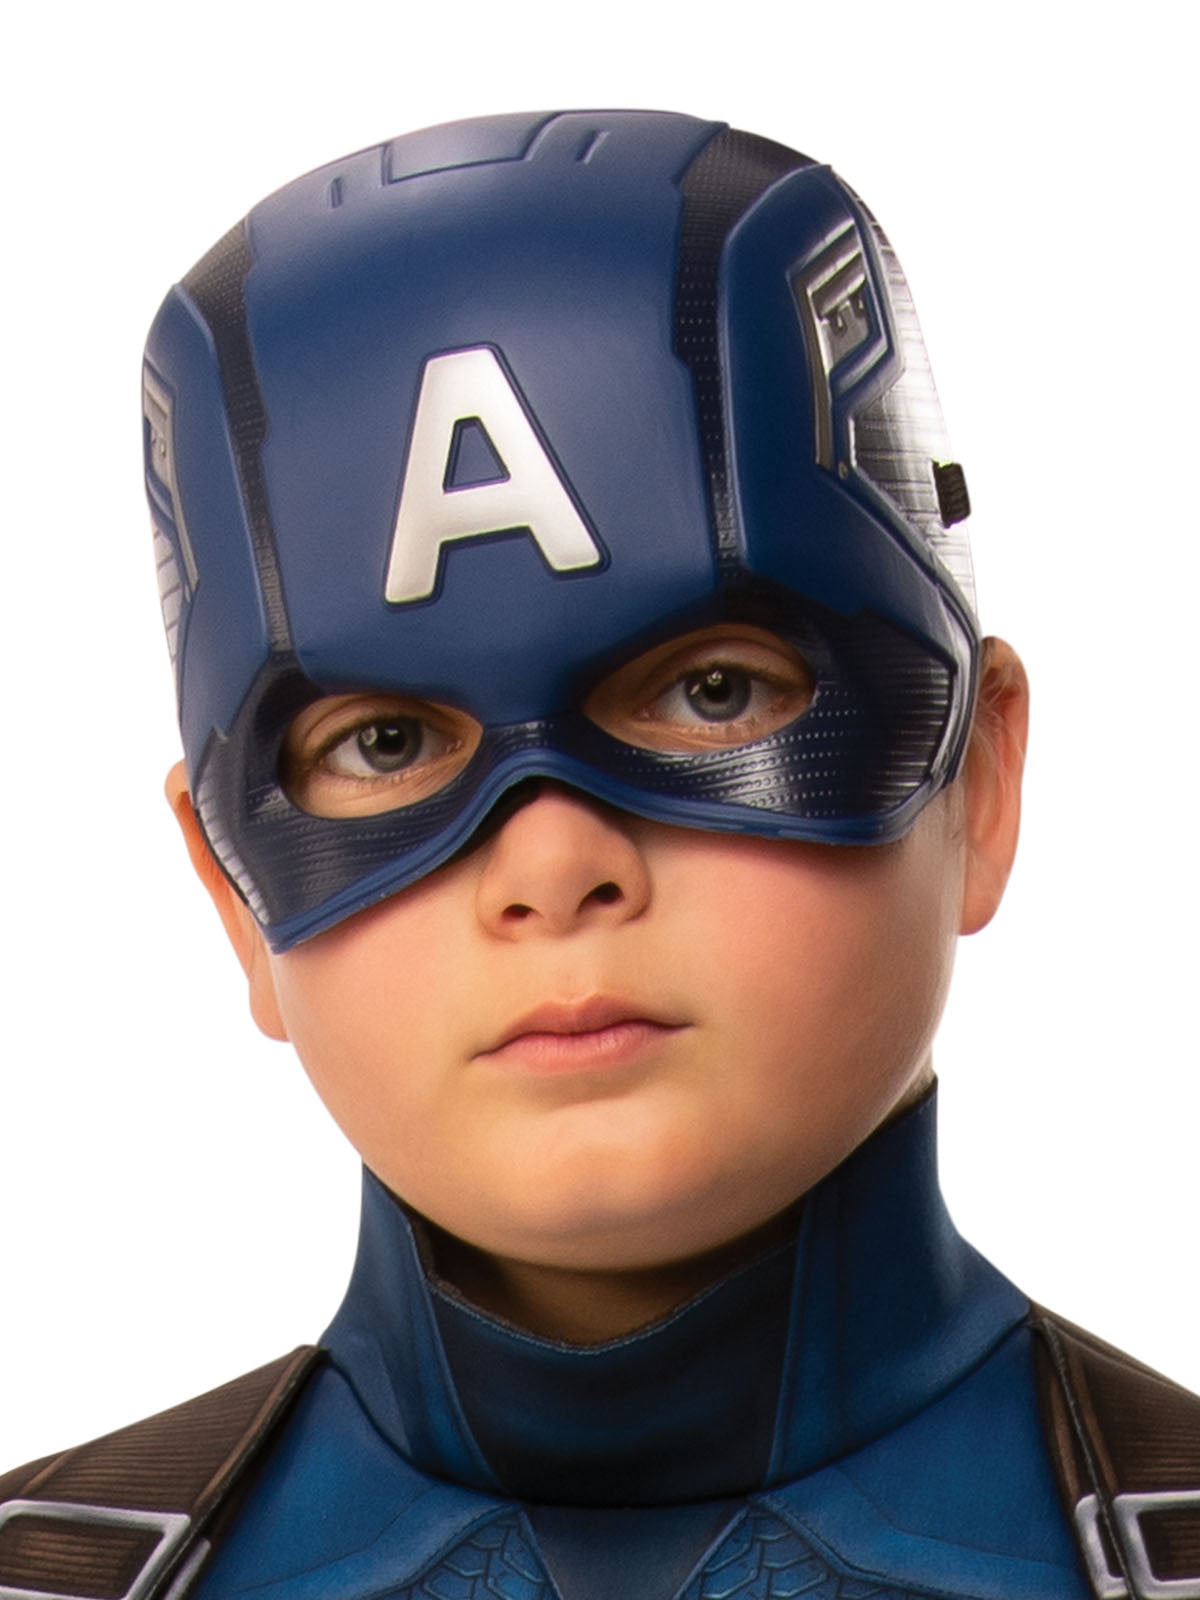 Captain America Deluxe Child Boy's Costume - Licensed